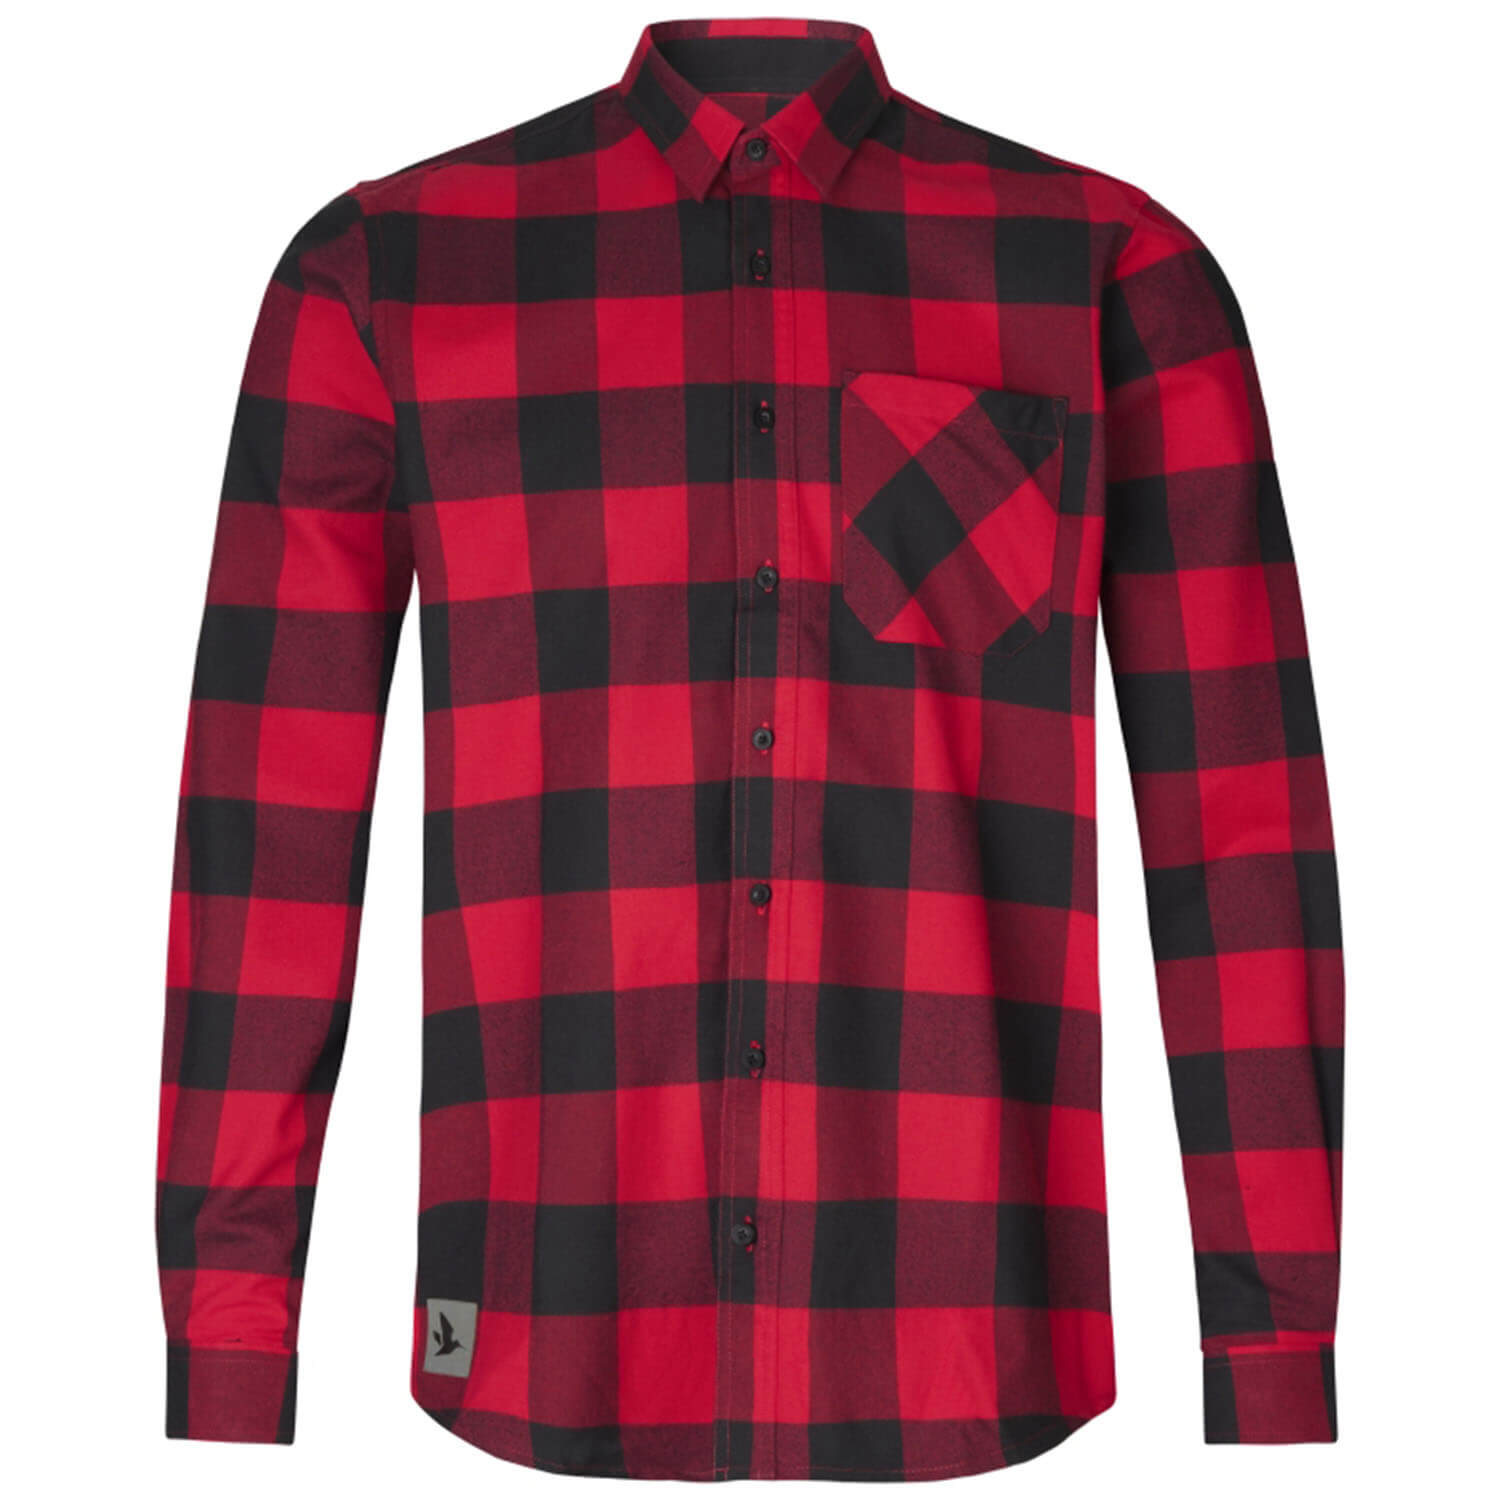  Seeland Jachthemd Toronto (rode ruit) - Overhemden